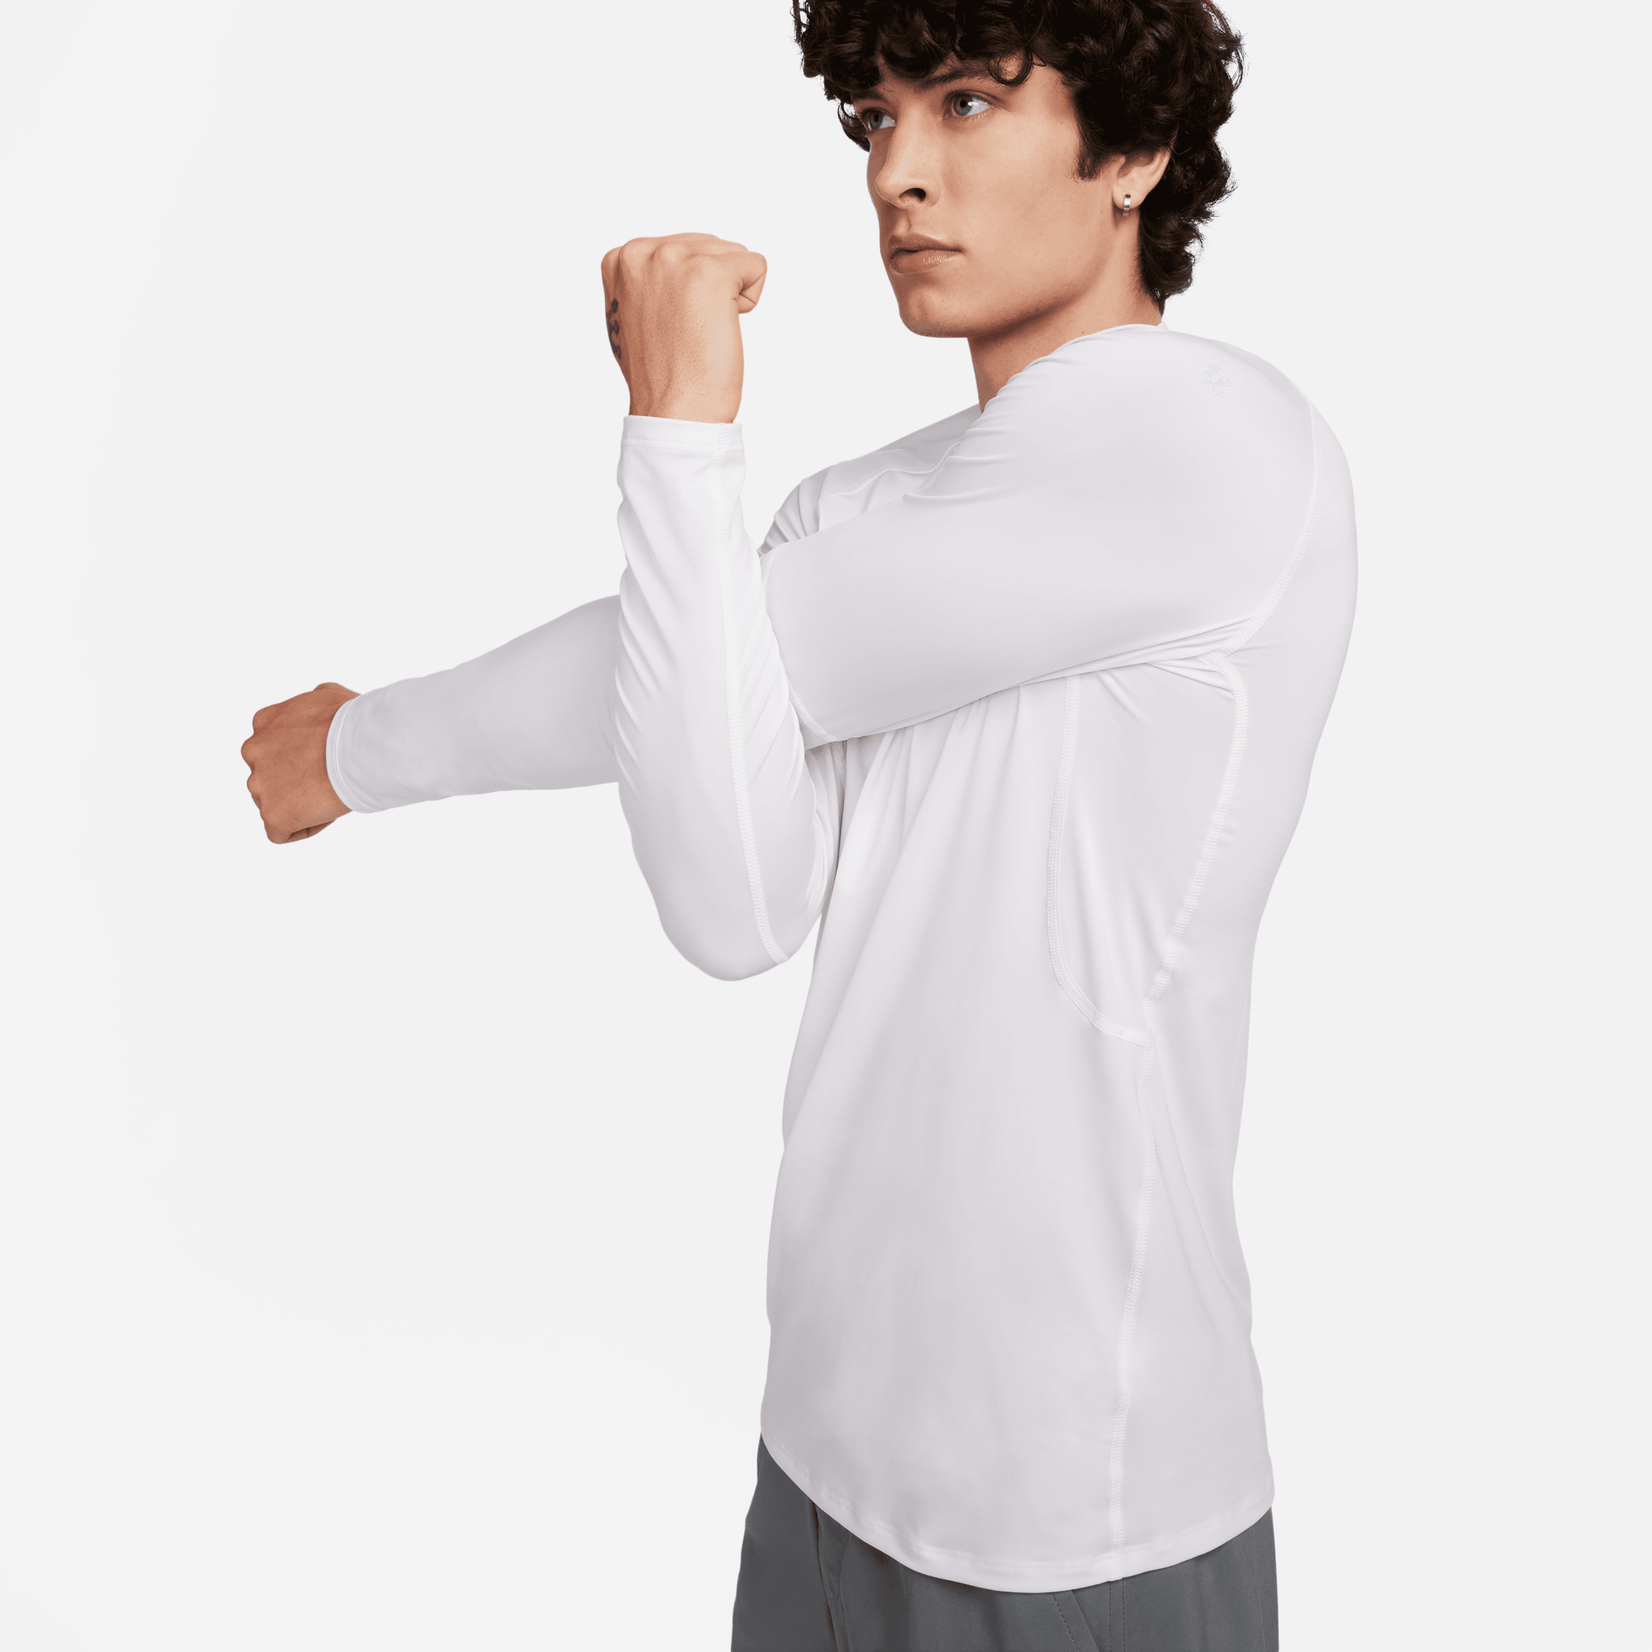 Nike Men's Dri-FIT Slim Long-Sleeve Fitness Top White